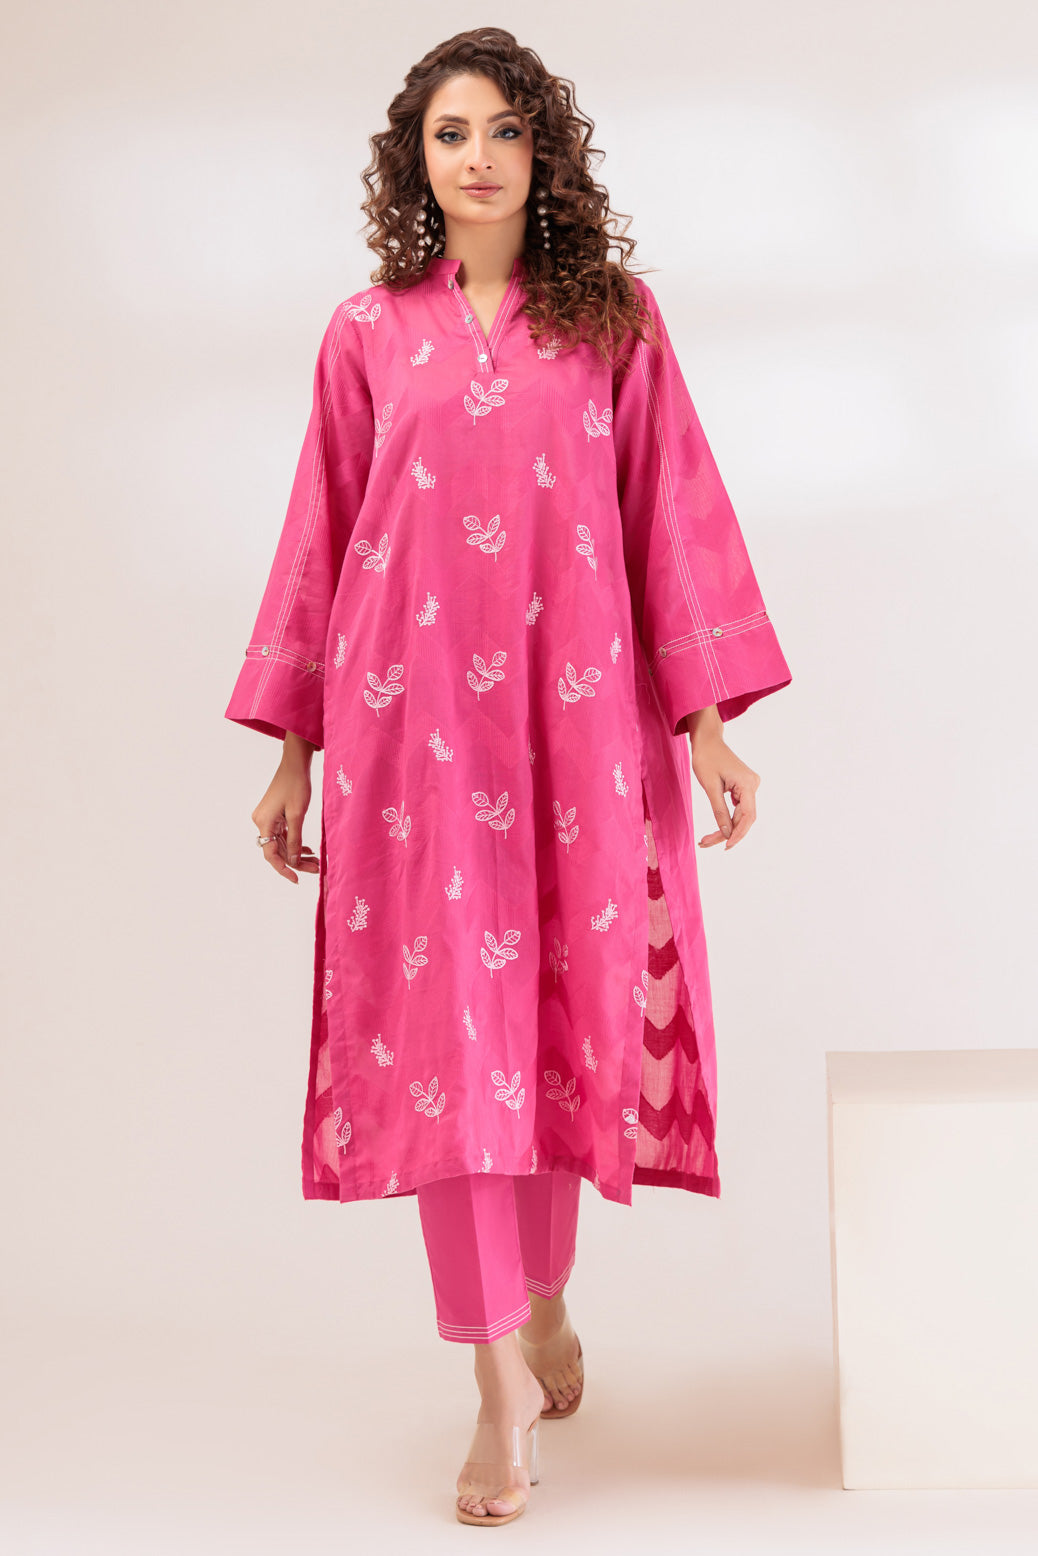 Jacquard Pink 2 Piece Stitched Suit - Bonanza